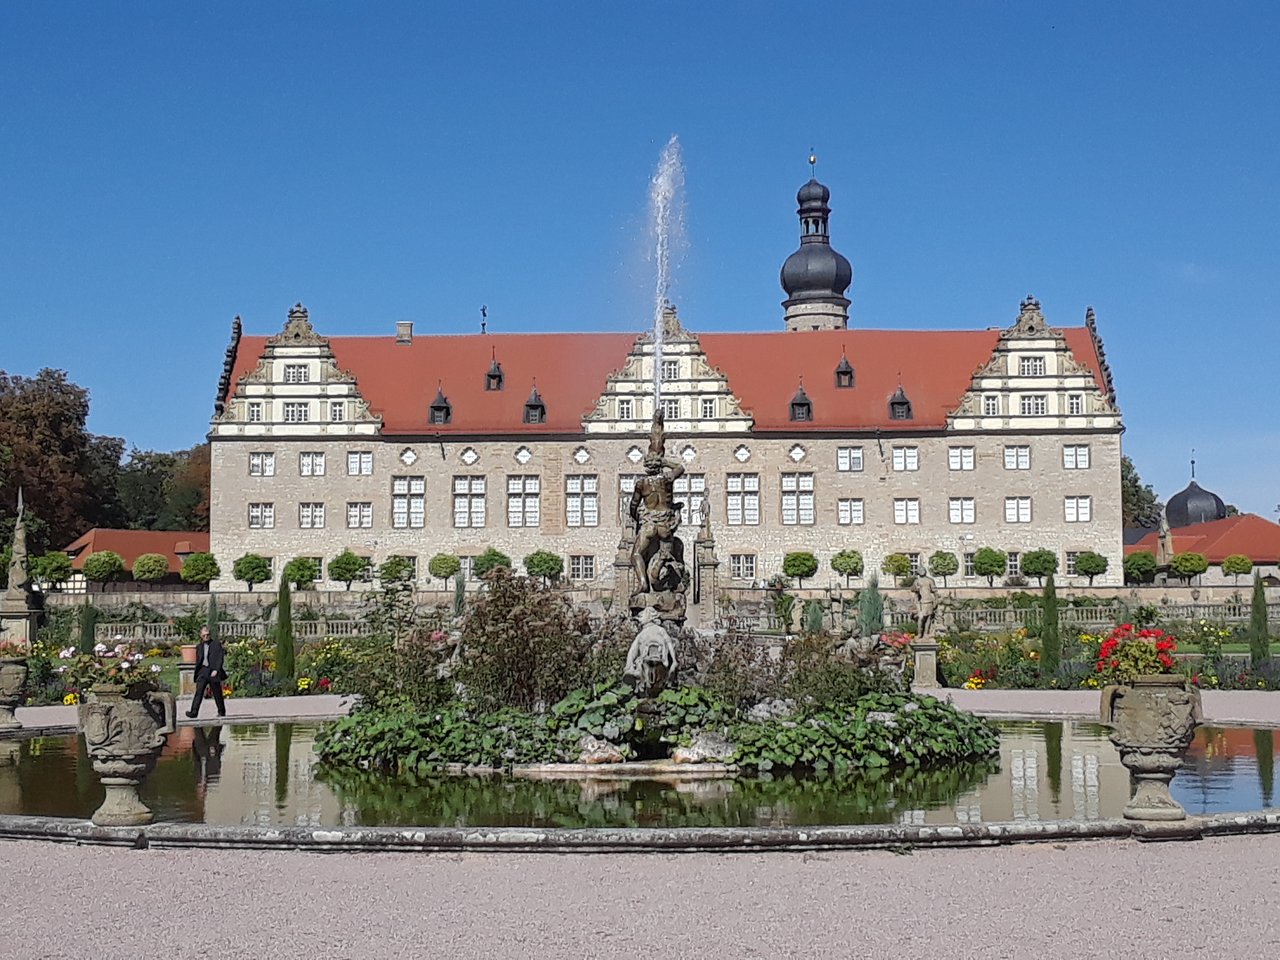 wiekersheim castle from